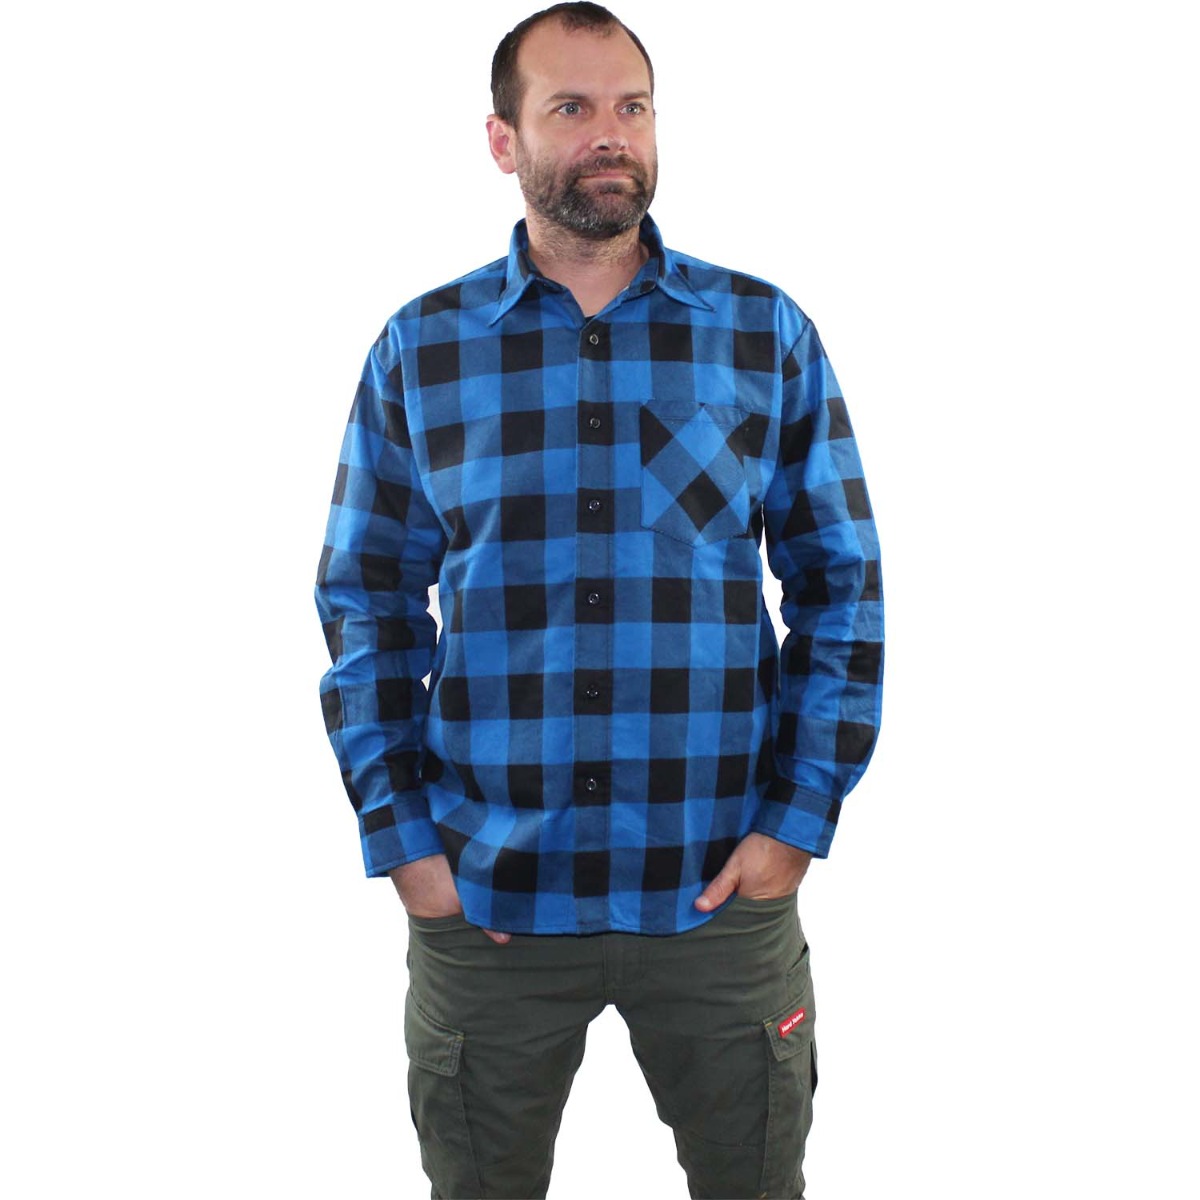 Wild River Flannelette Shirt Blue Check